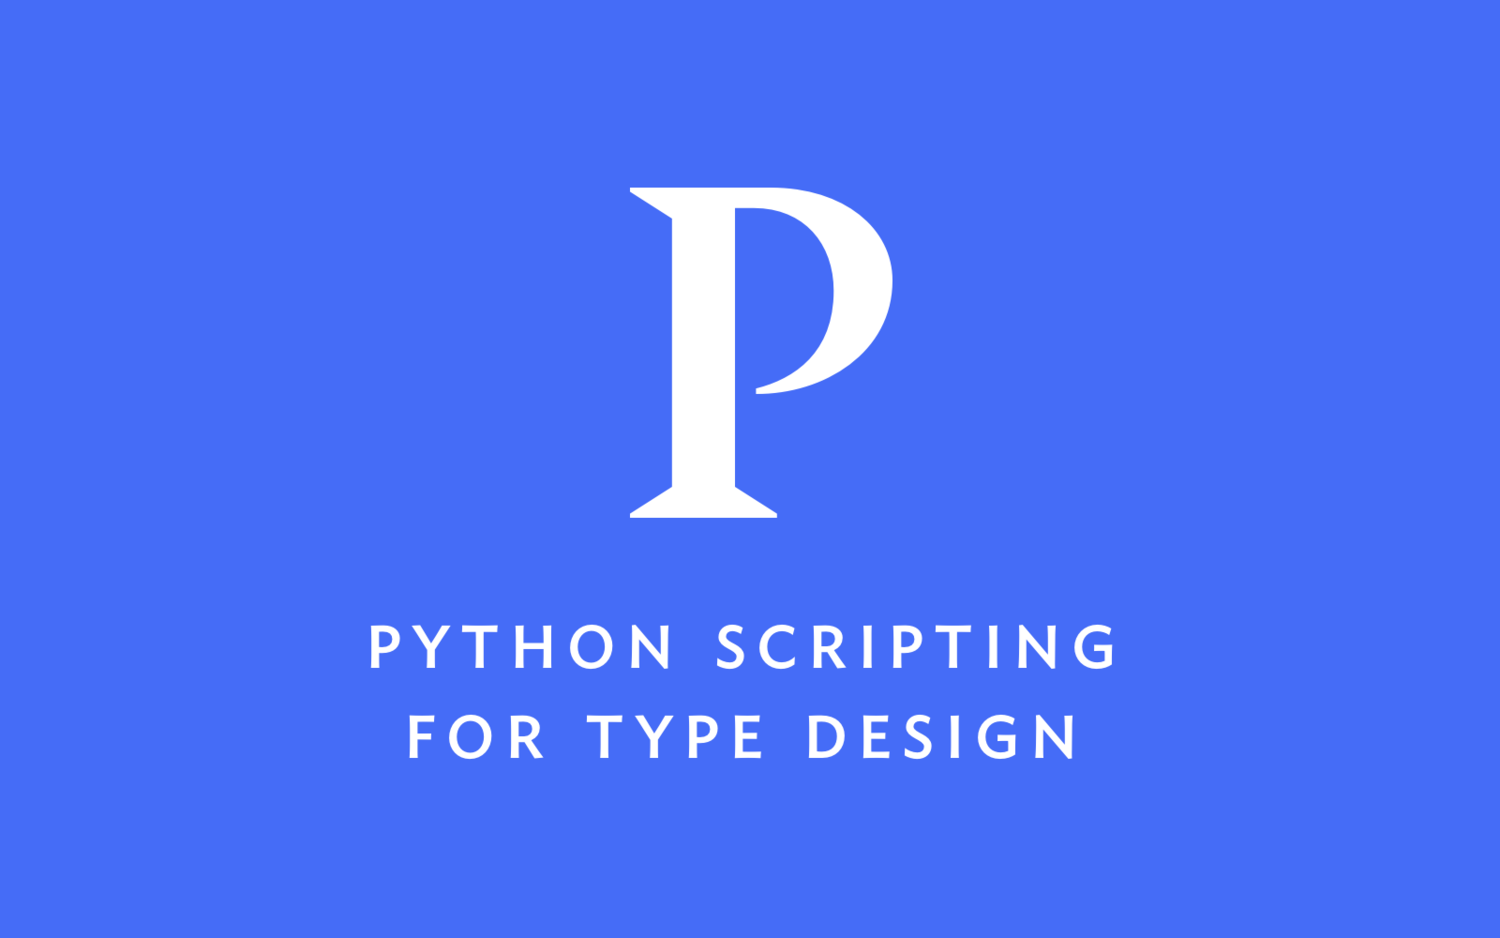 Python Scripting for Type Design - Peter Nowell Design